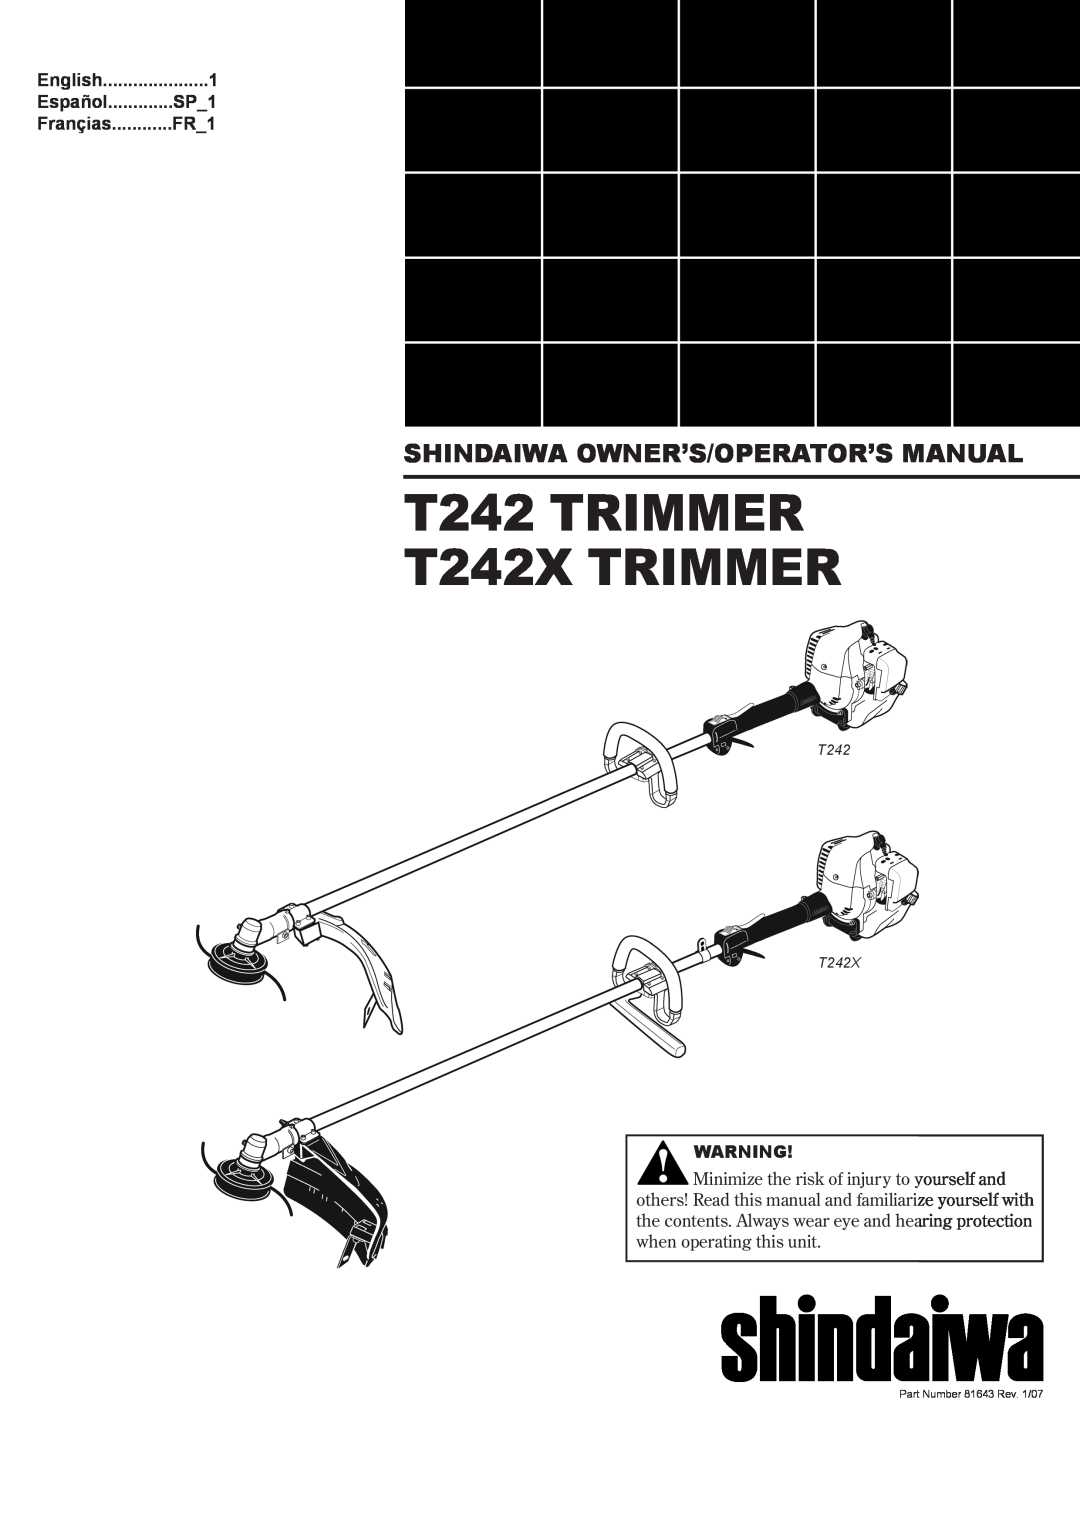 Shindaiwa 81643 manual T242 TRIMMER T242X TRIMMER, Shindaiwa Owner’S/Operator’S Manual, Español, Françias, English 